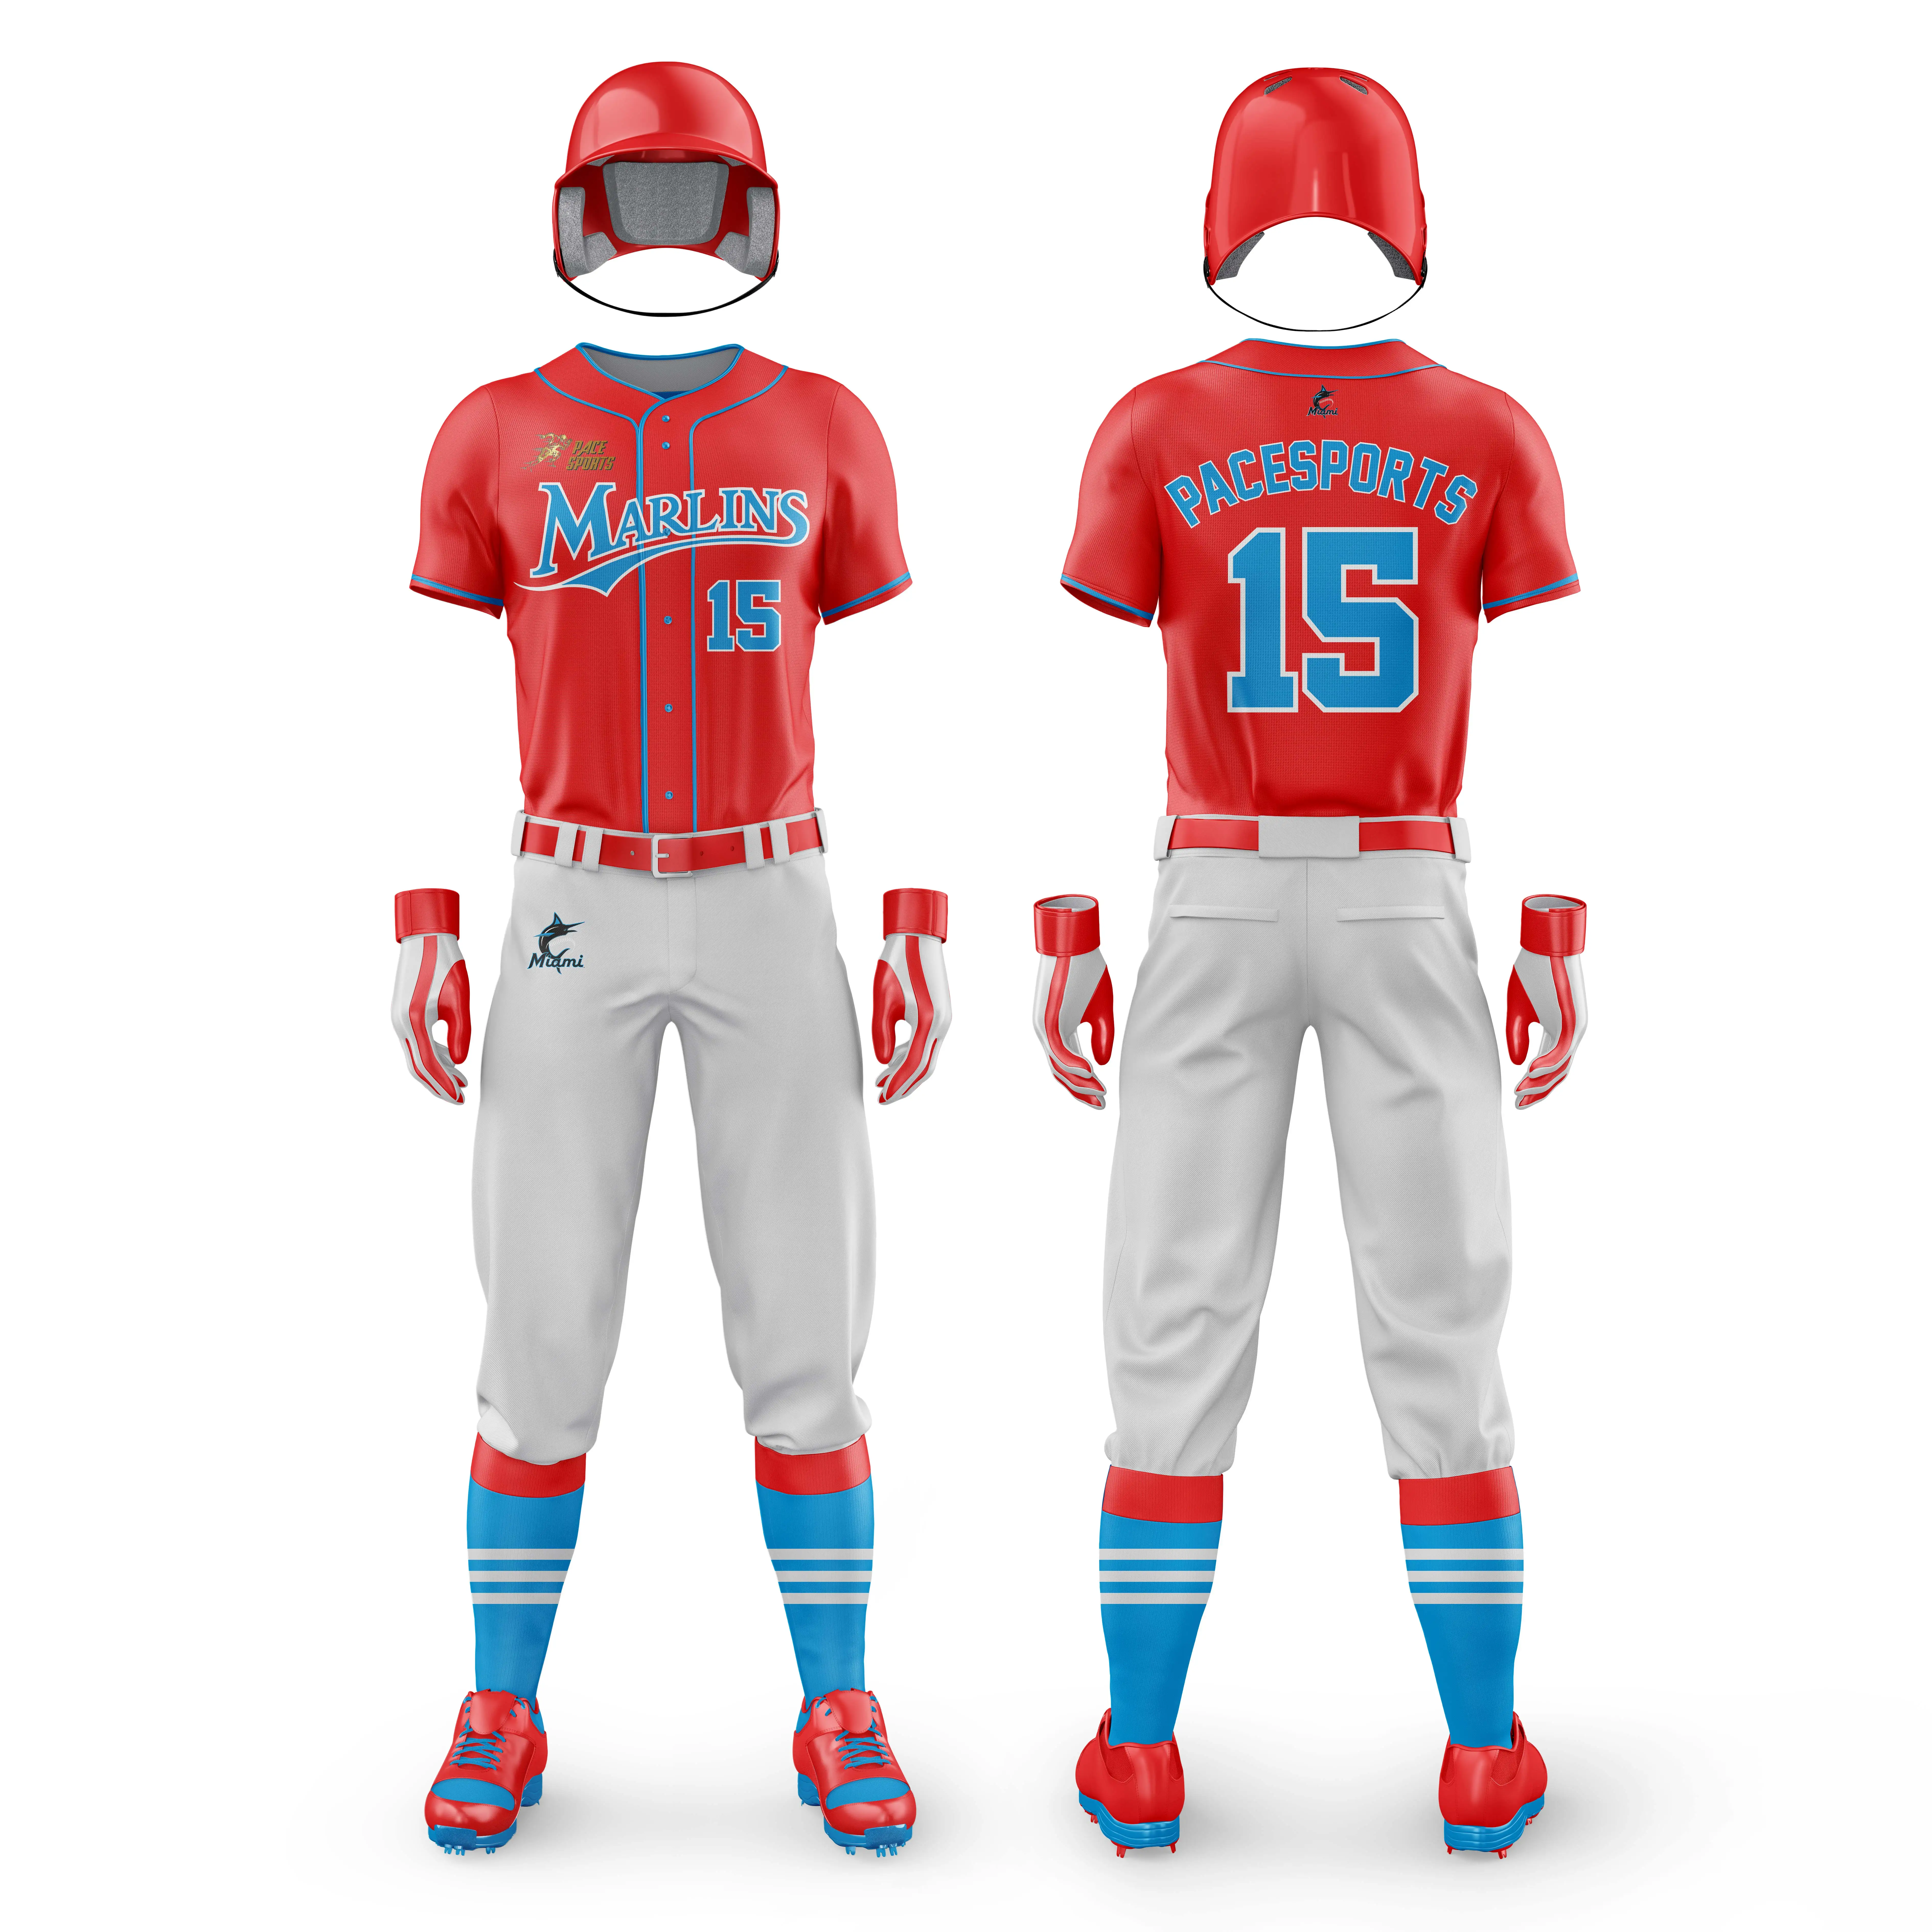 Source Youth mens strip custom baseball jersey custom sublimated